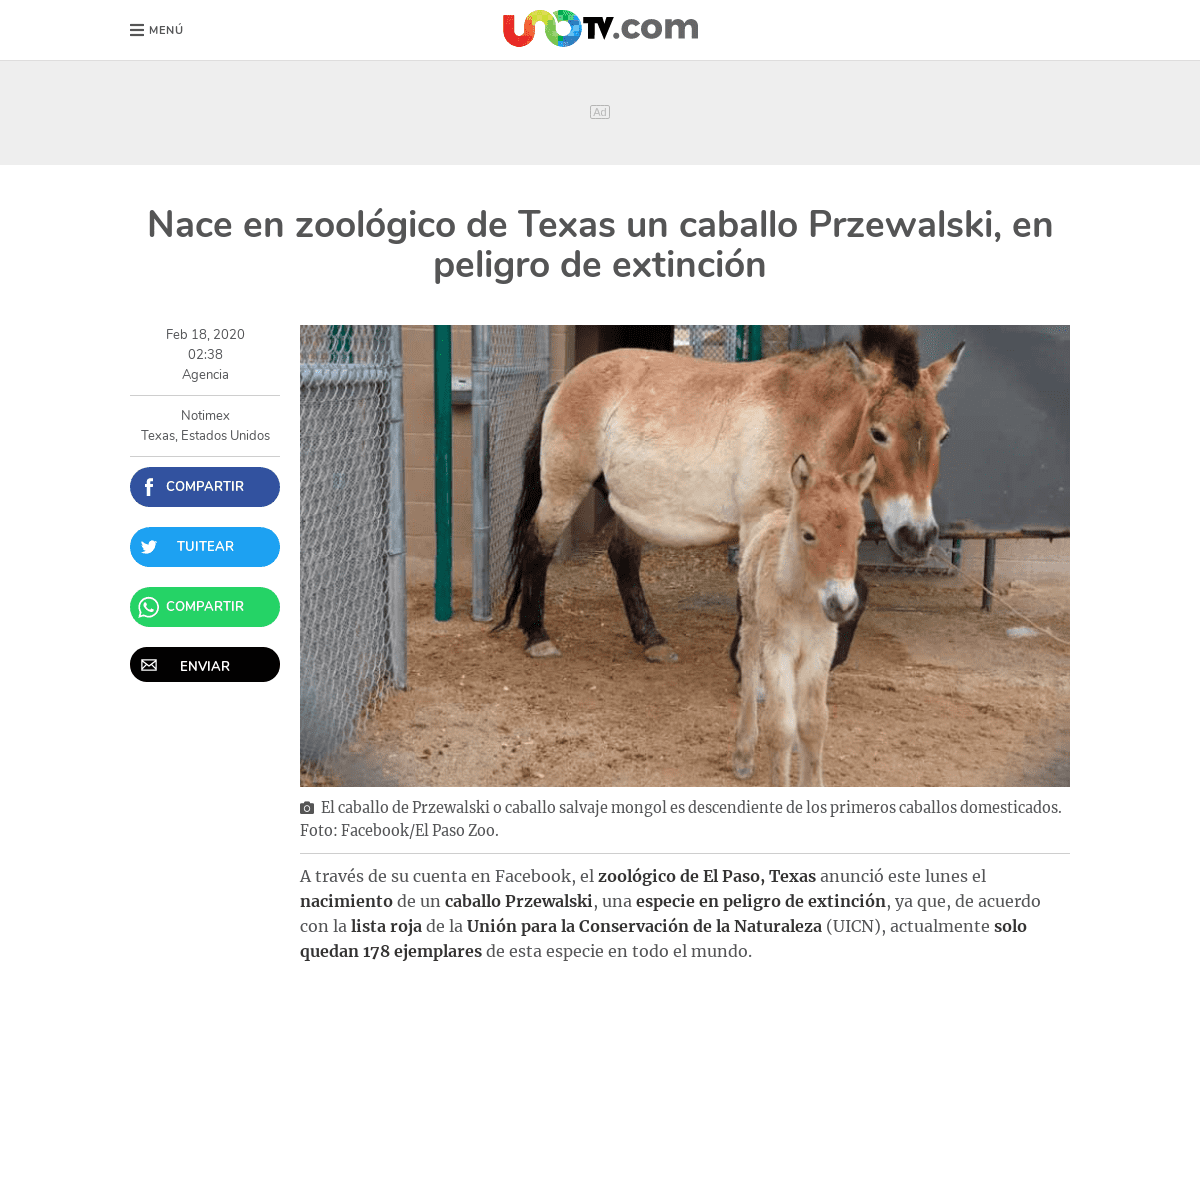 A complete backup of www.unotv.com/noticias/portal/internacional/detalle/nace-en-zoologico-de-texas-un-caballo-przewalski-en-pel